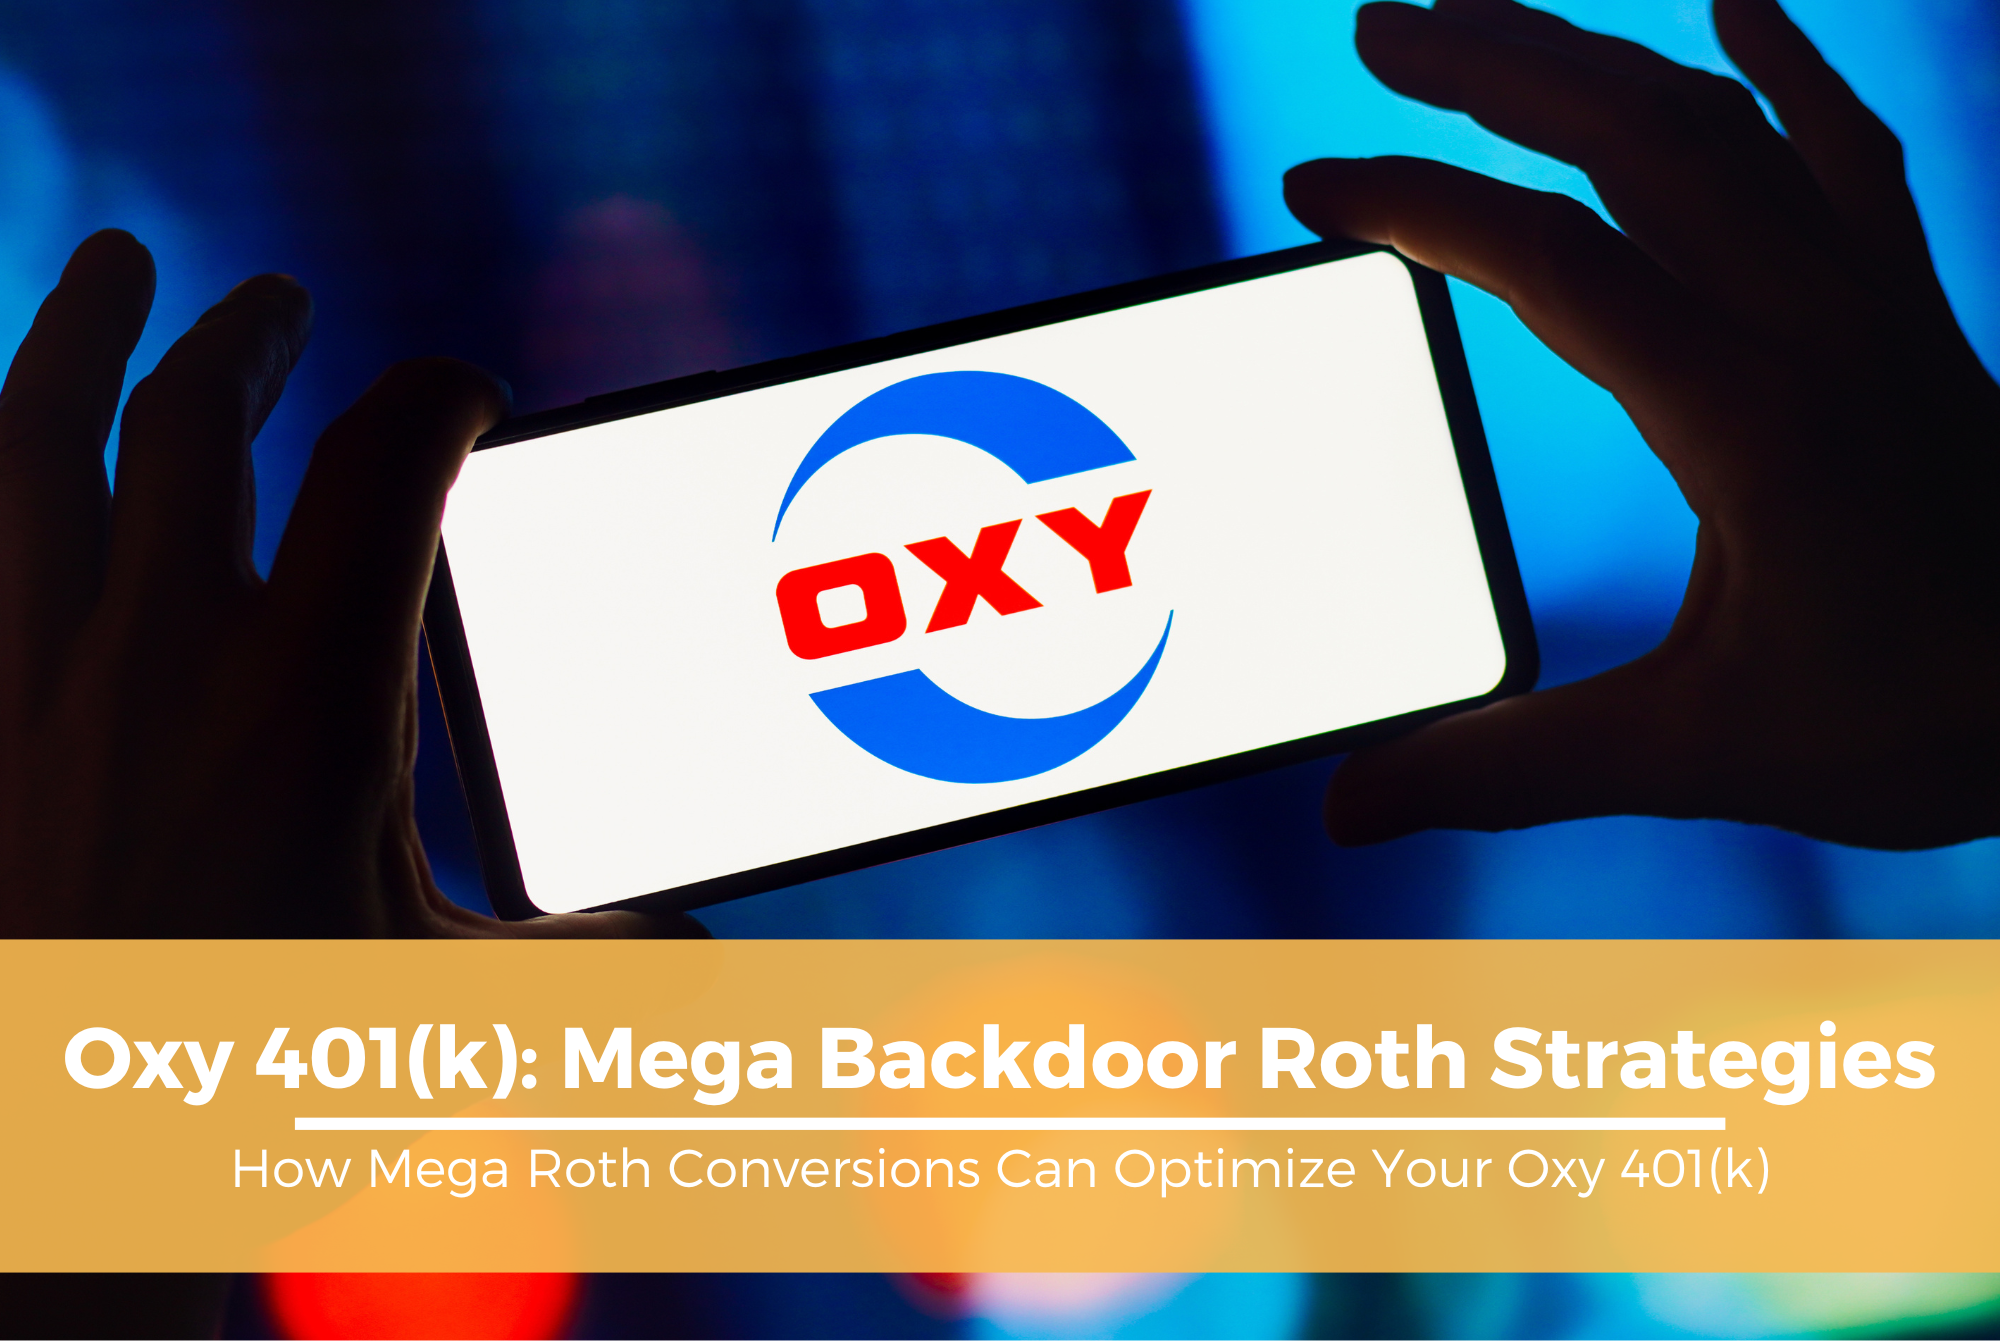 Oxy 401(k) Mega Backdoor Roth